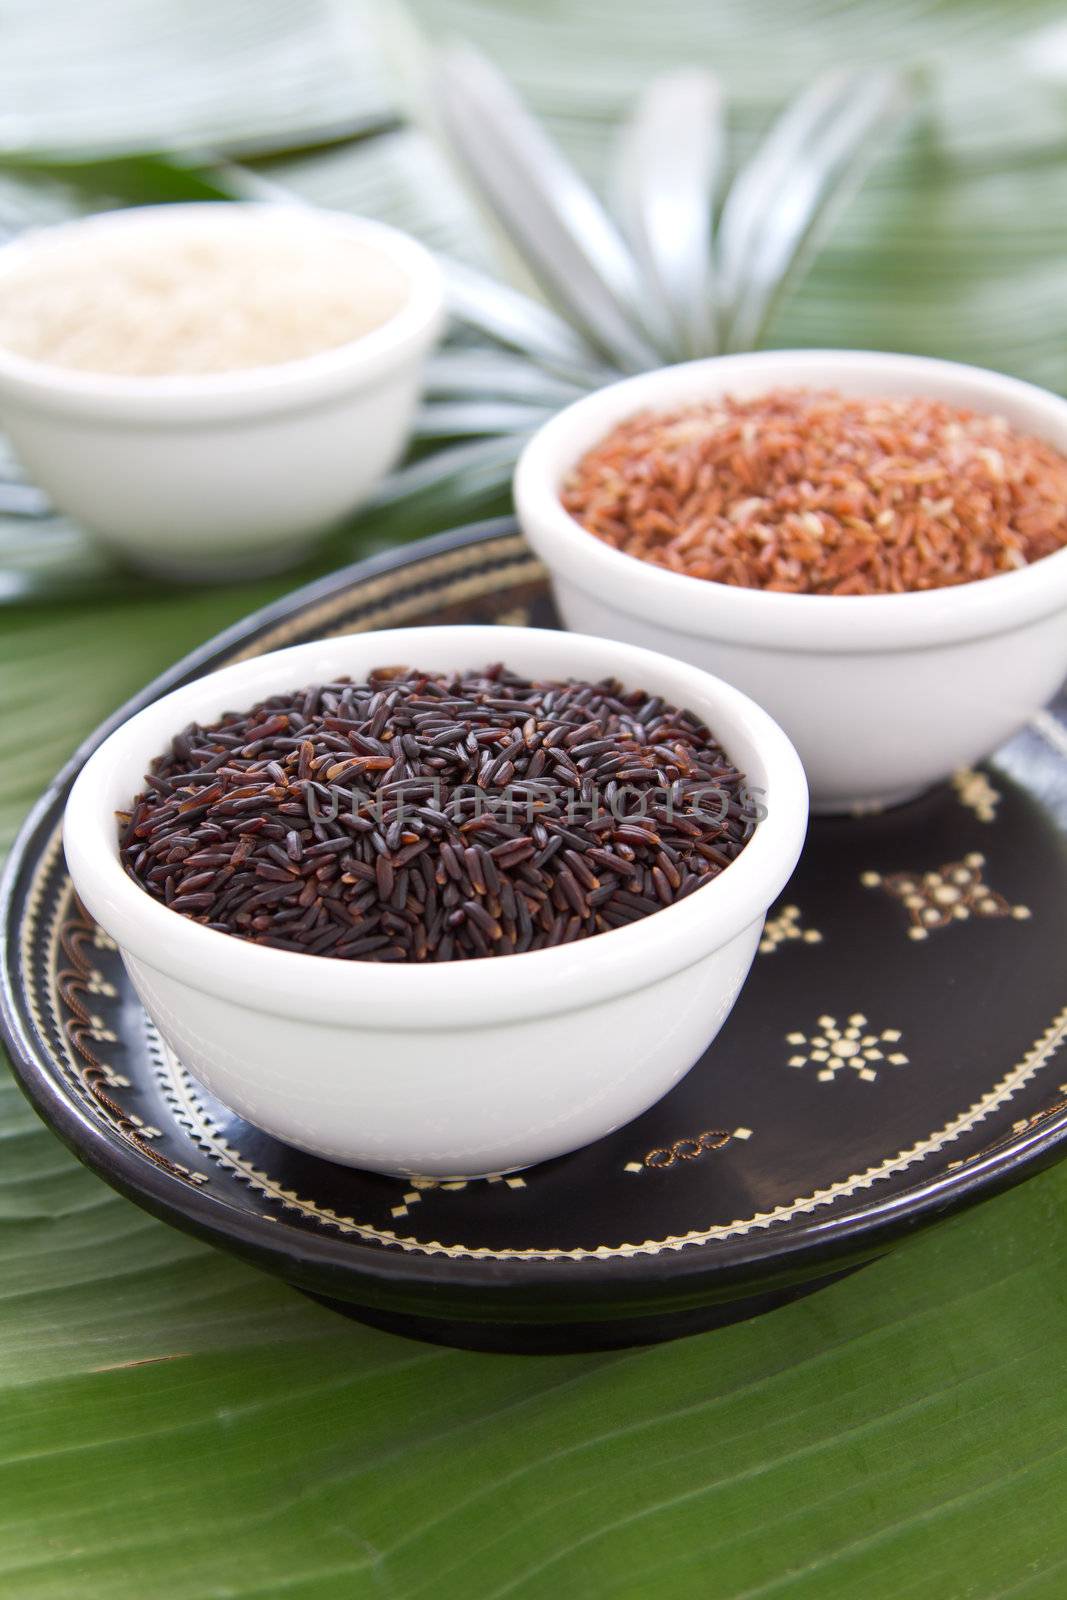 Varieties of raw black rice,jasmine rice and brown rice in white bowls